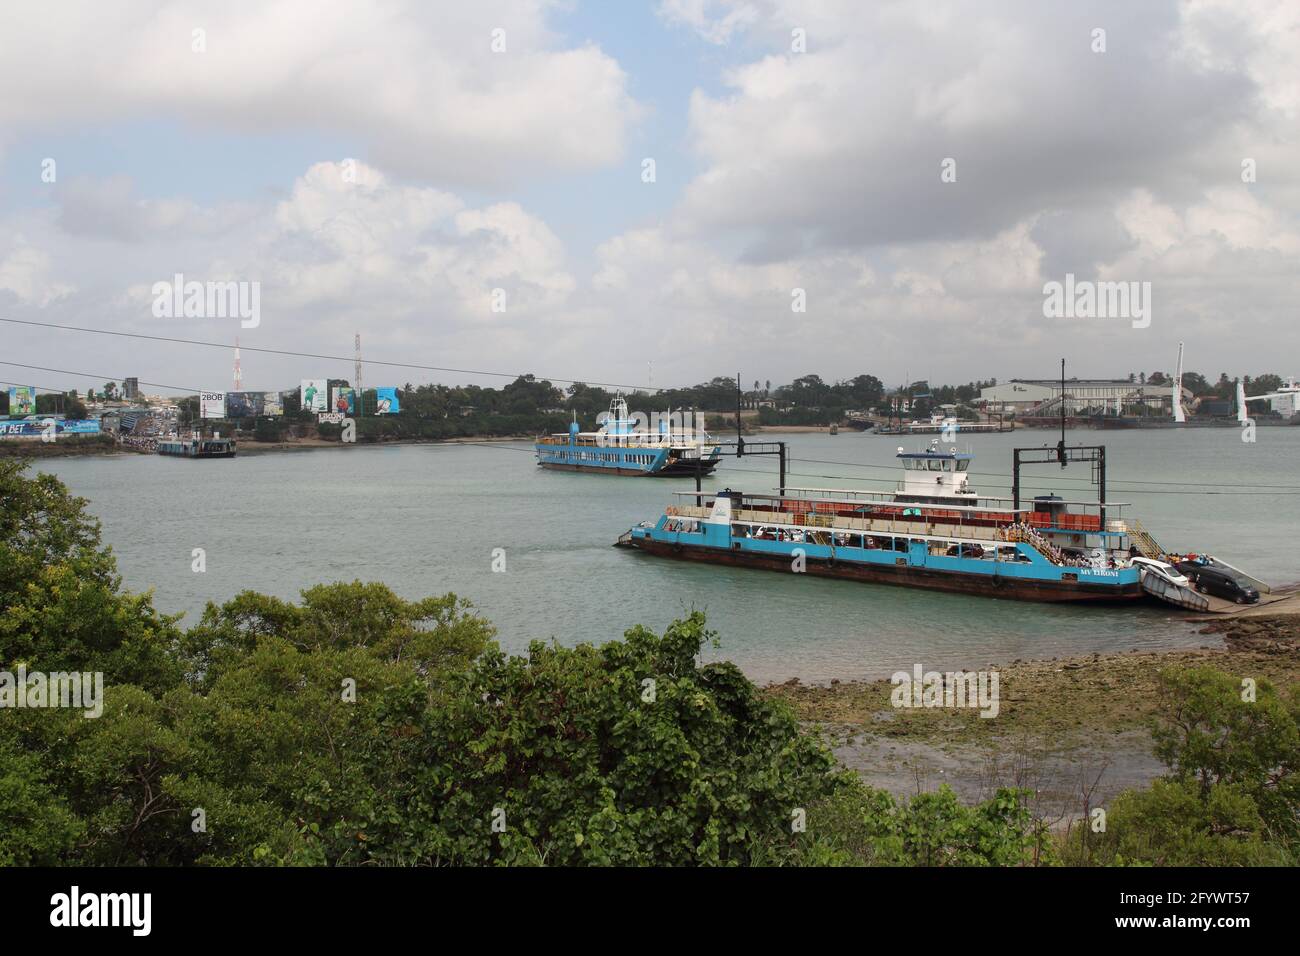 KENYA, MOMBASA - AUGUST 13, 2018; The Likoni ferry links  the island city of Mombasa with the mainland town of Likoni Stock Photo